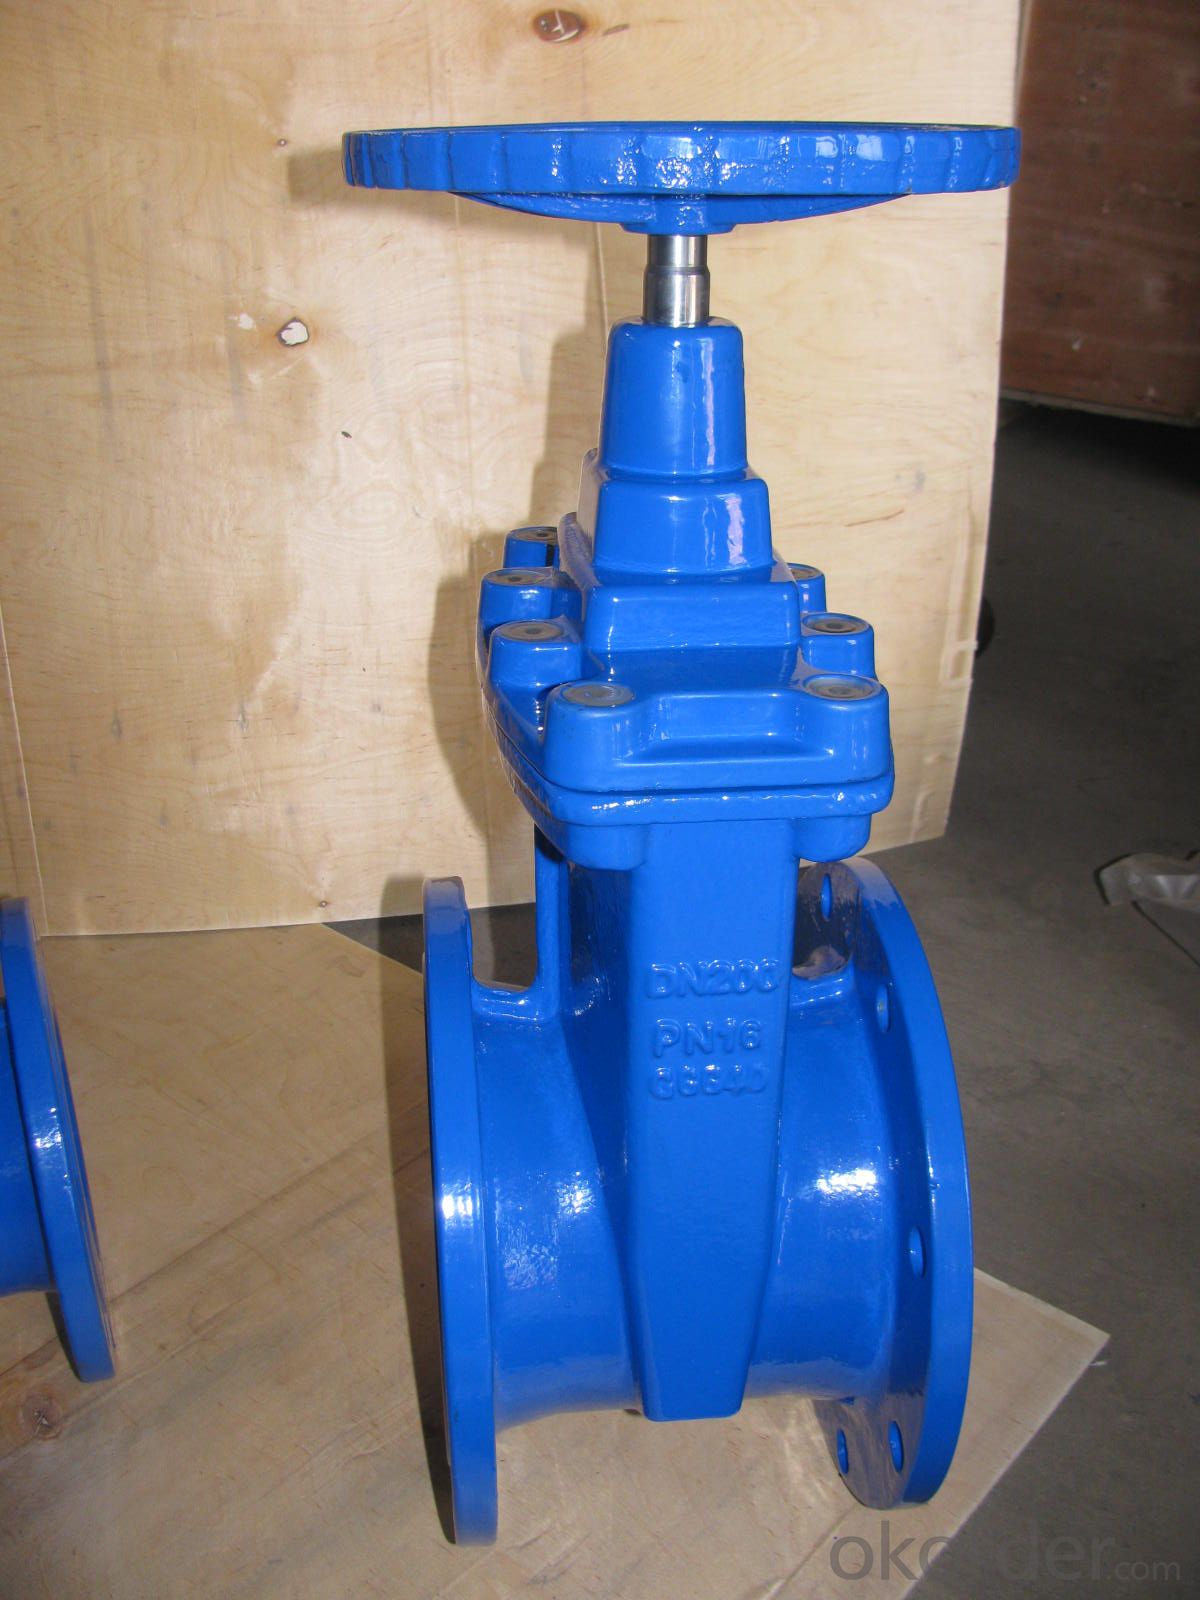 Ductile iron/ cast iron gate valve pn16